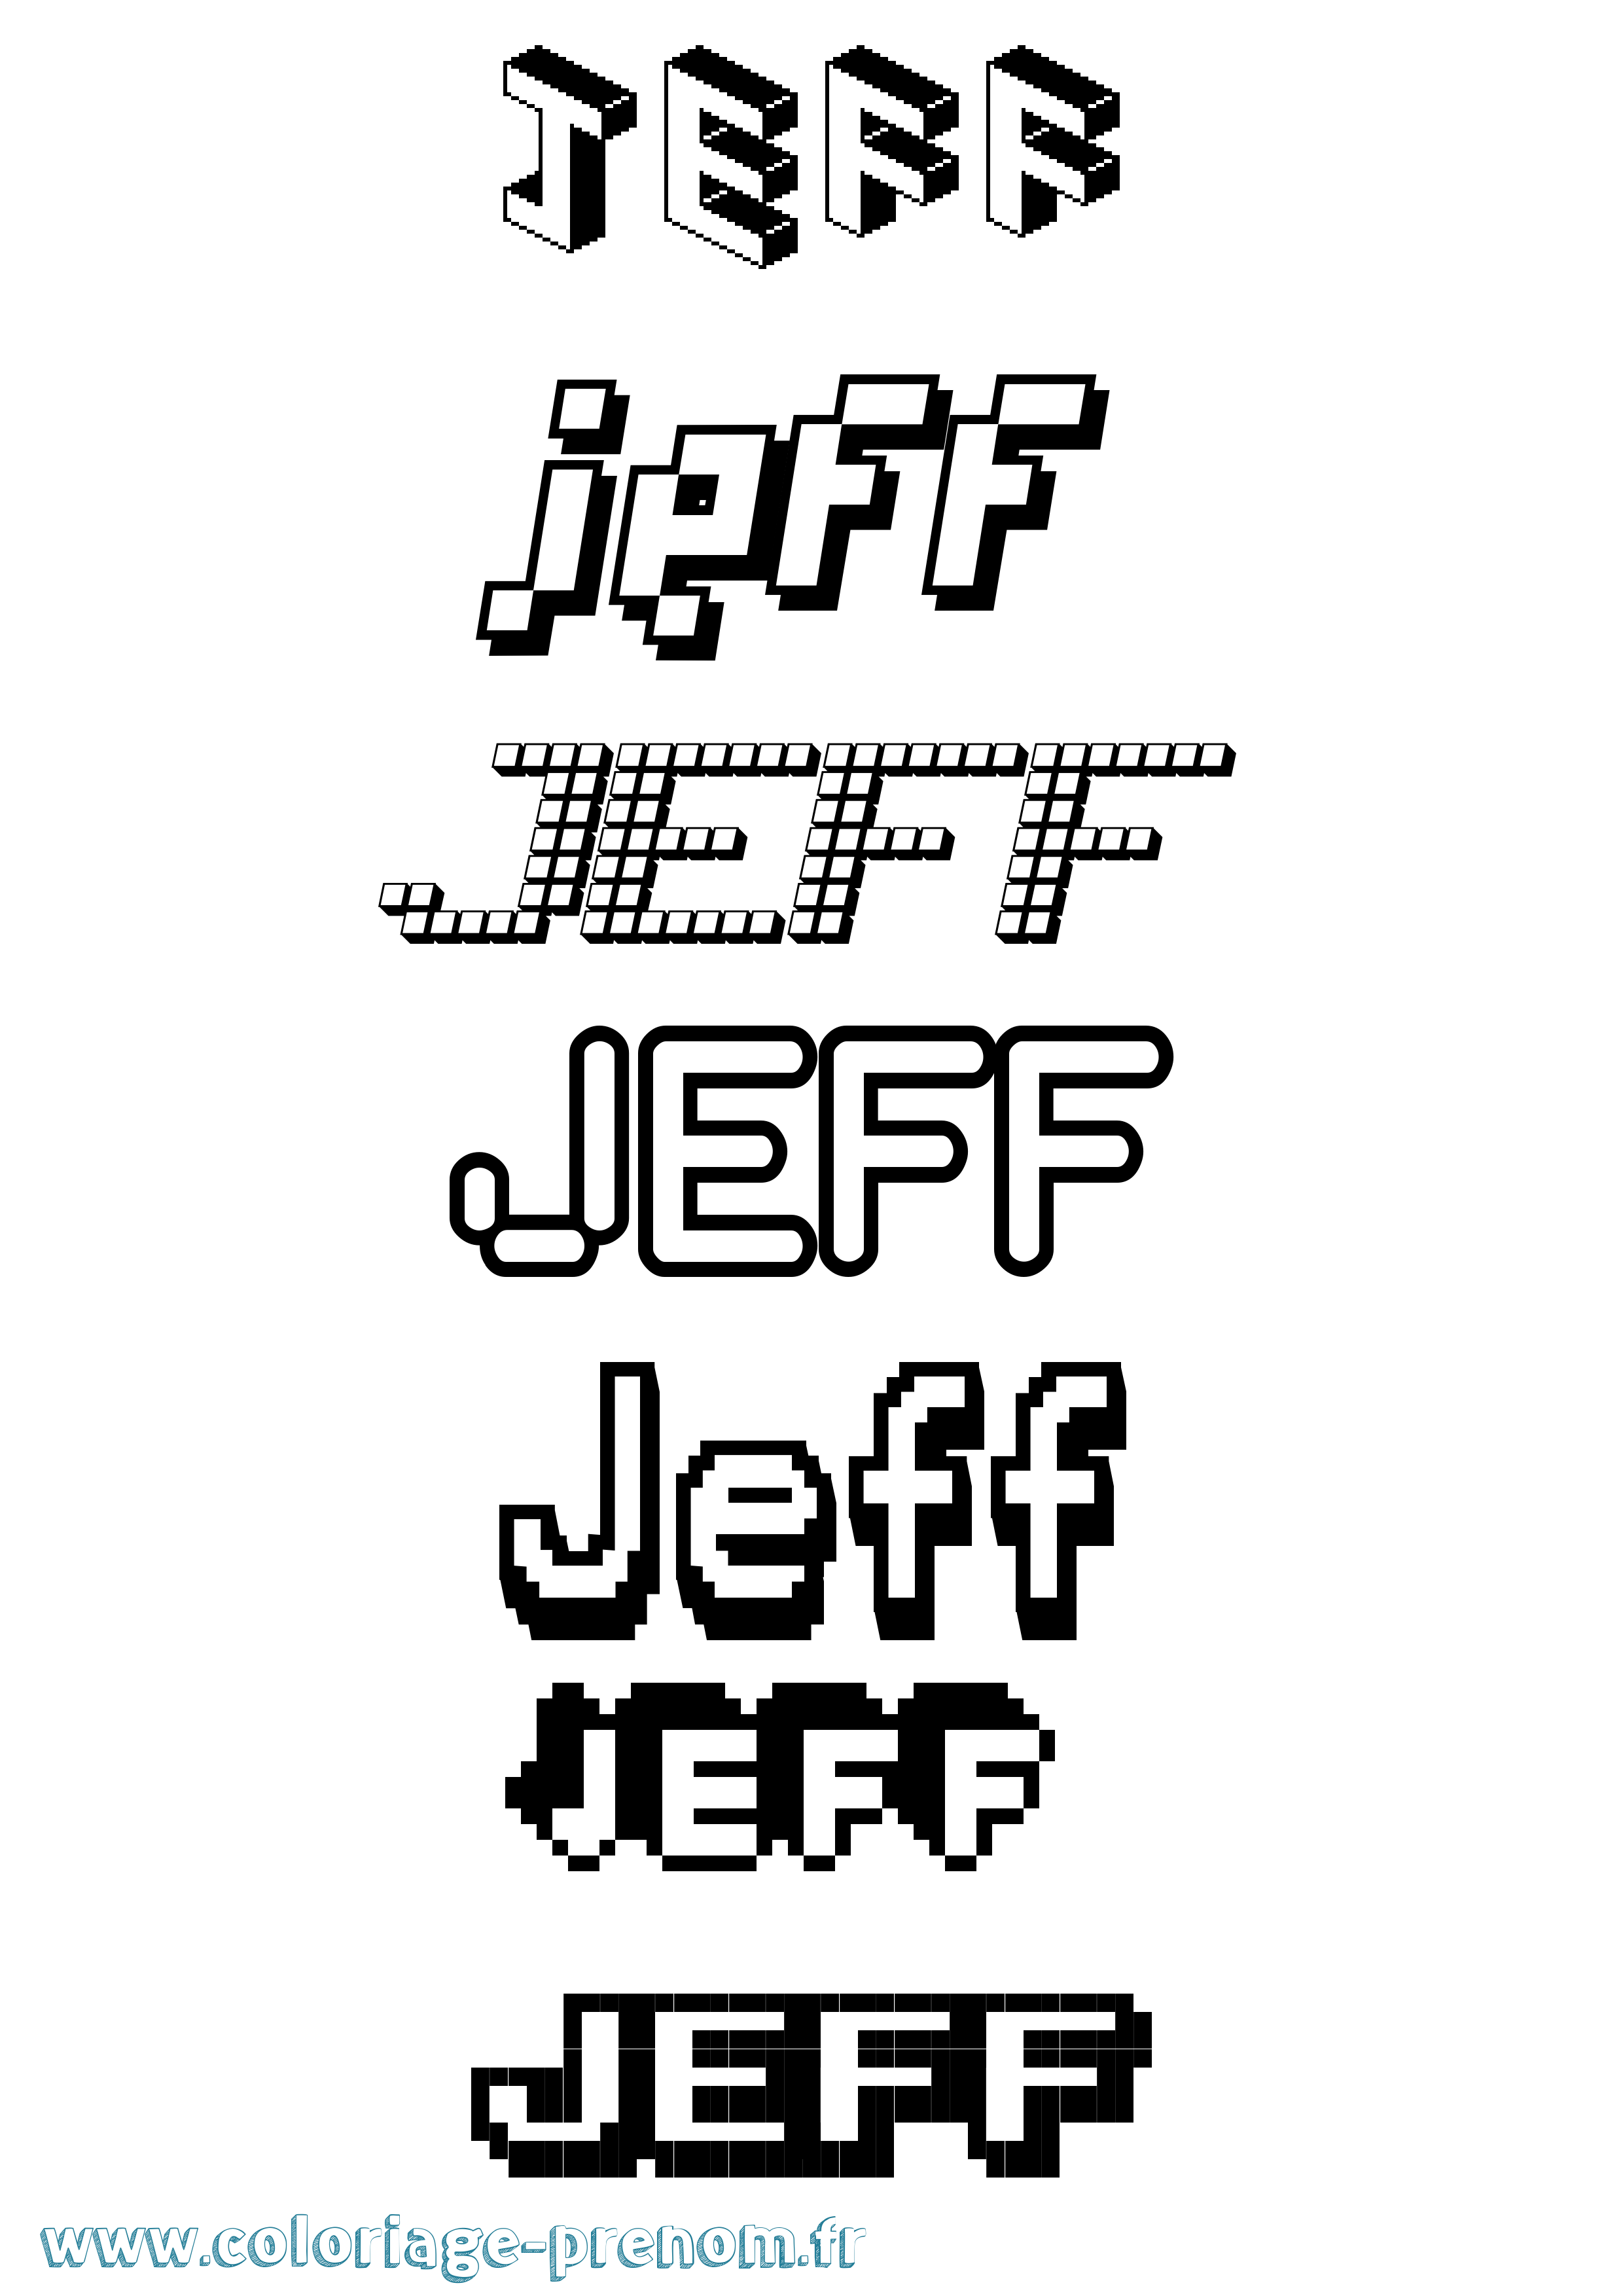 Coloriage prénom Jeff Pixel